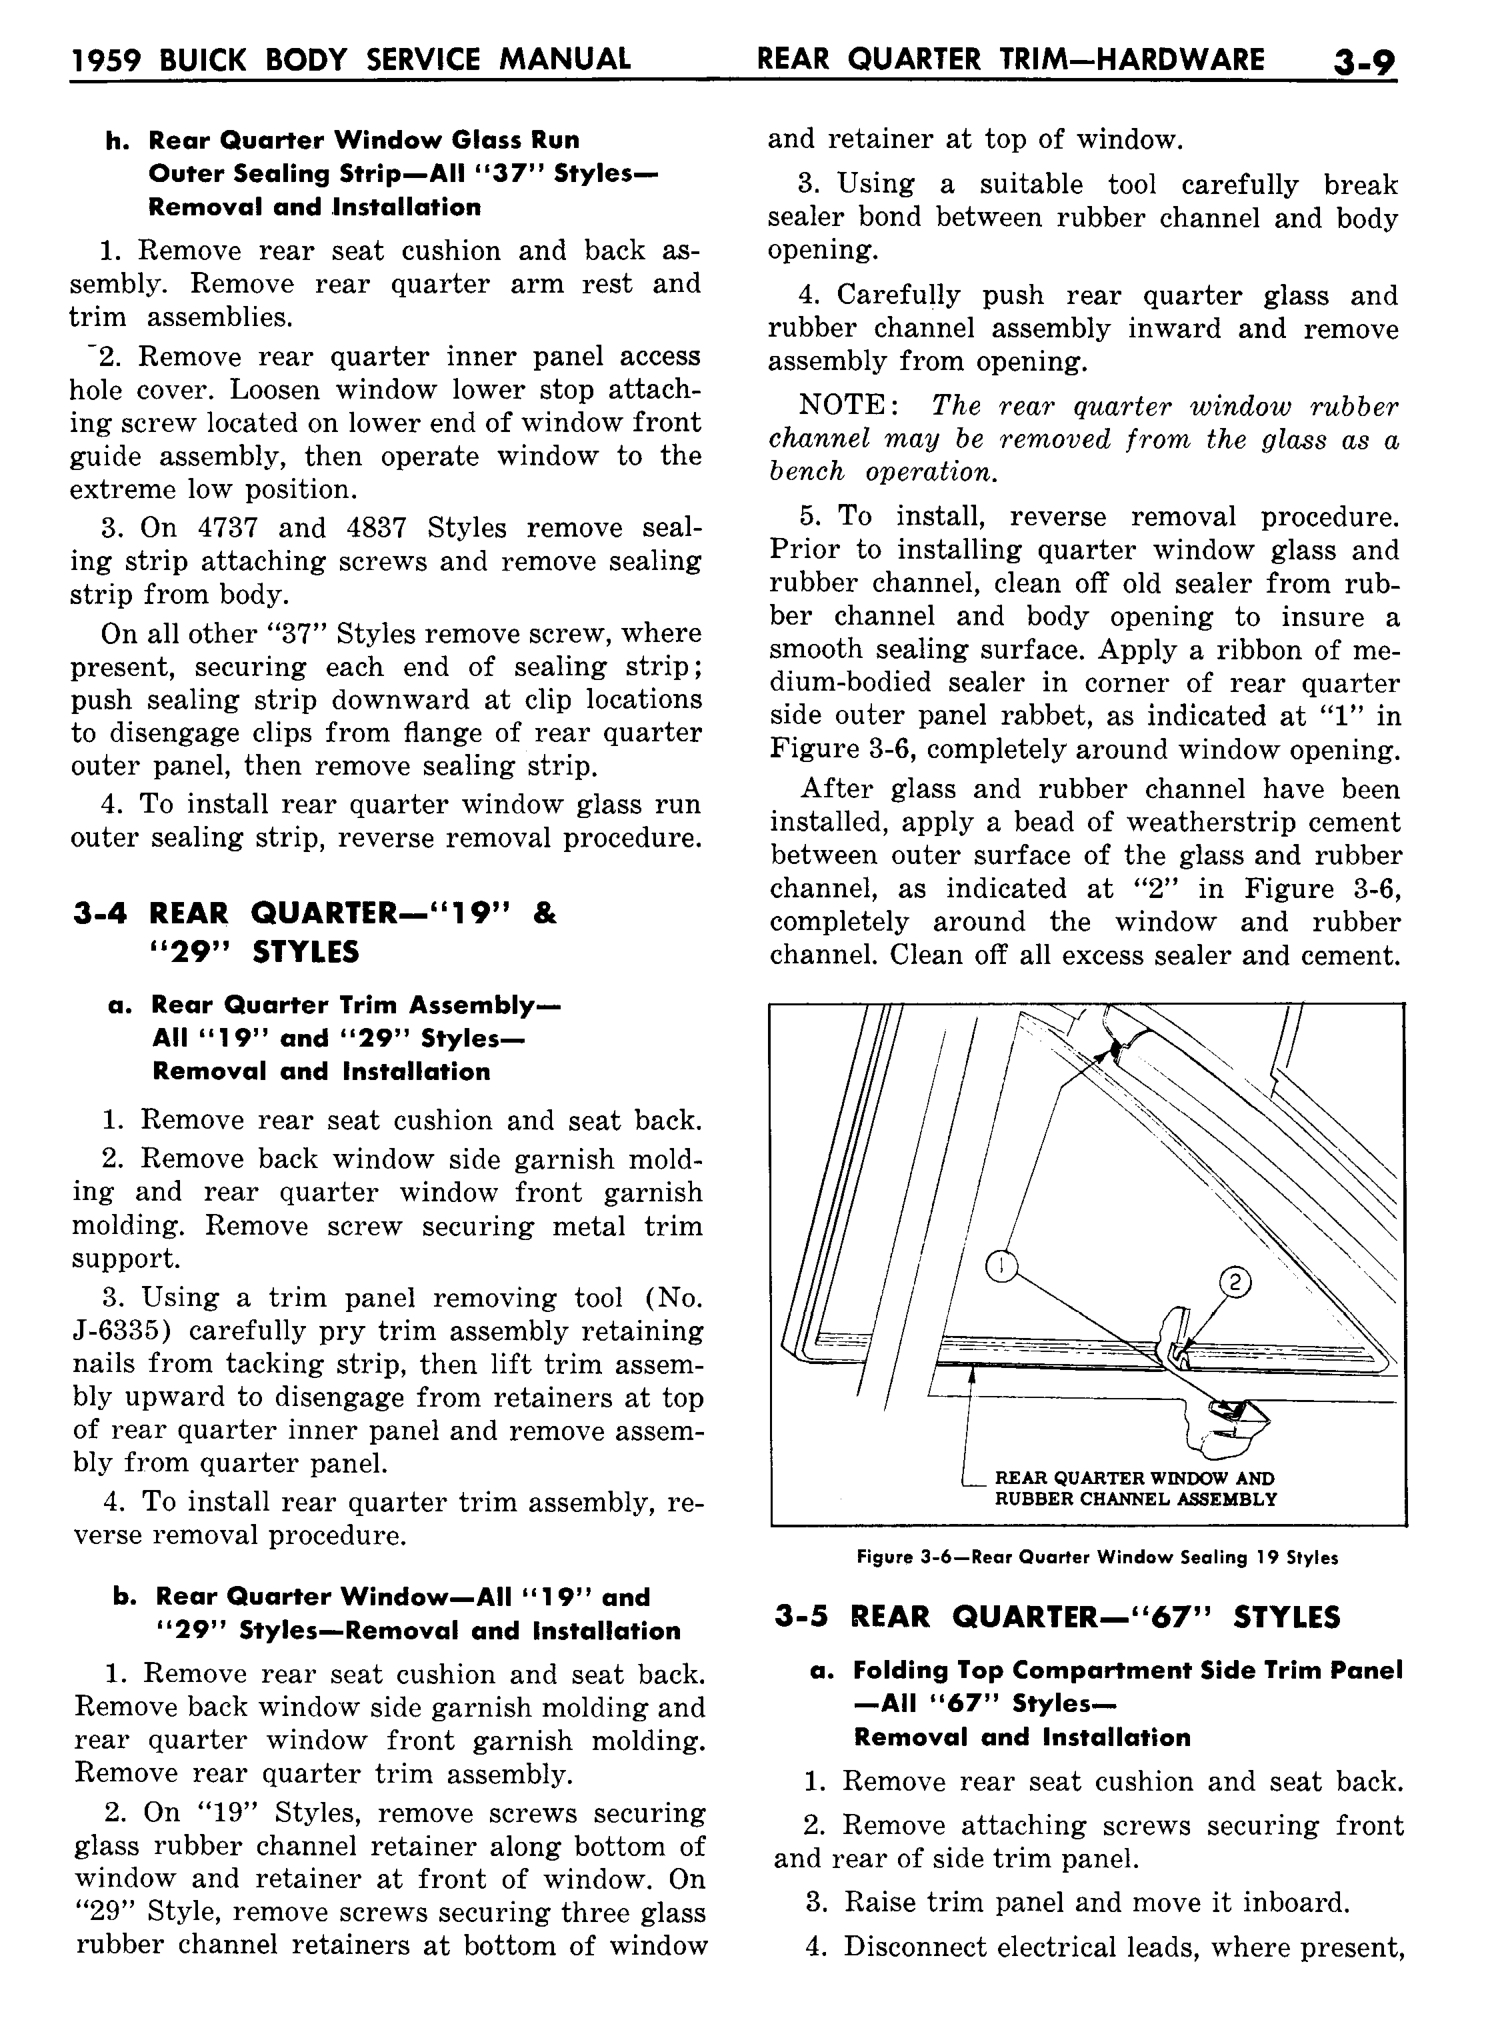 n_04 1959 Buick Body Service-Rear Quarter_9.jpg